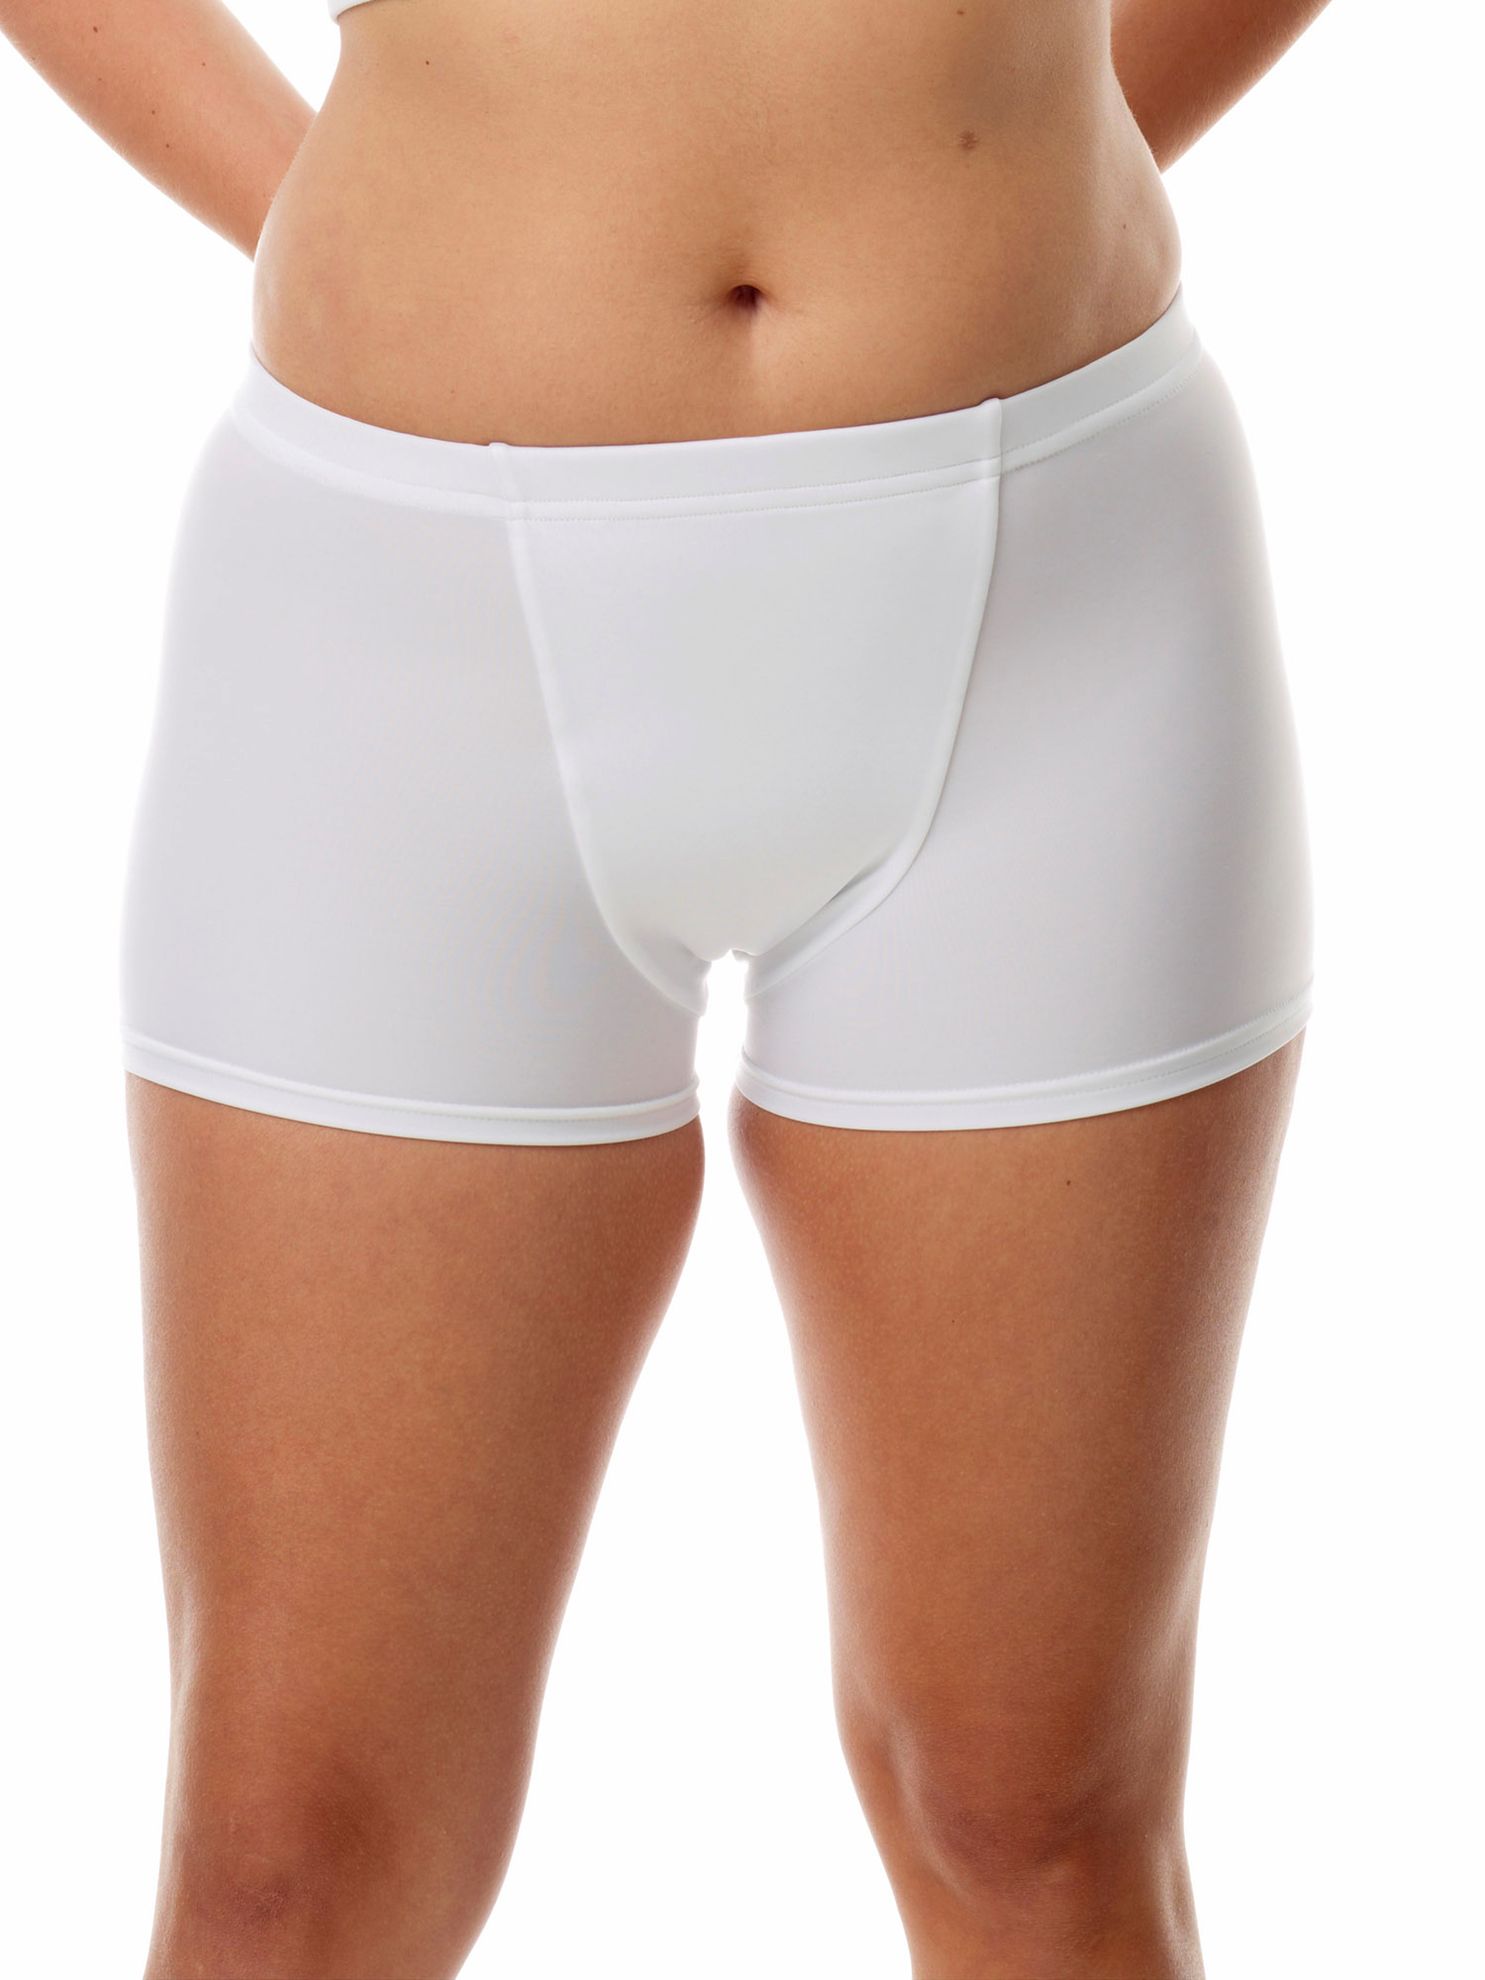 ZWEZWA Slip Shorts for Under Dresses Women Boy Shorts Underwear Compression  Shorts for Women Chub Rub Boxers Boyshorts Panties(C,L) - Yahoo Shopping